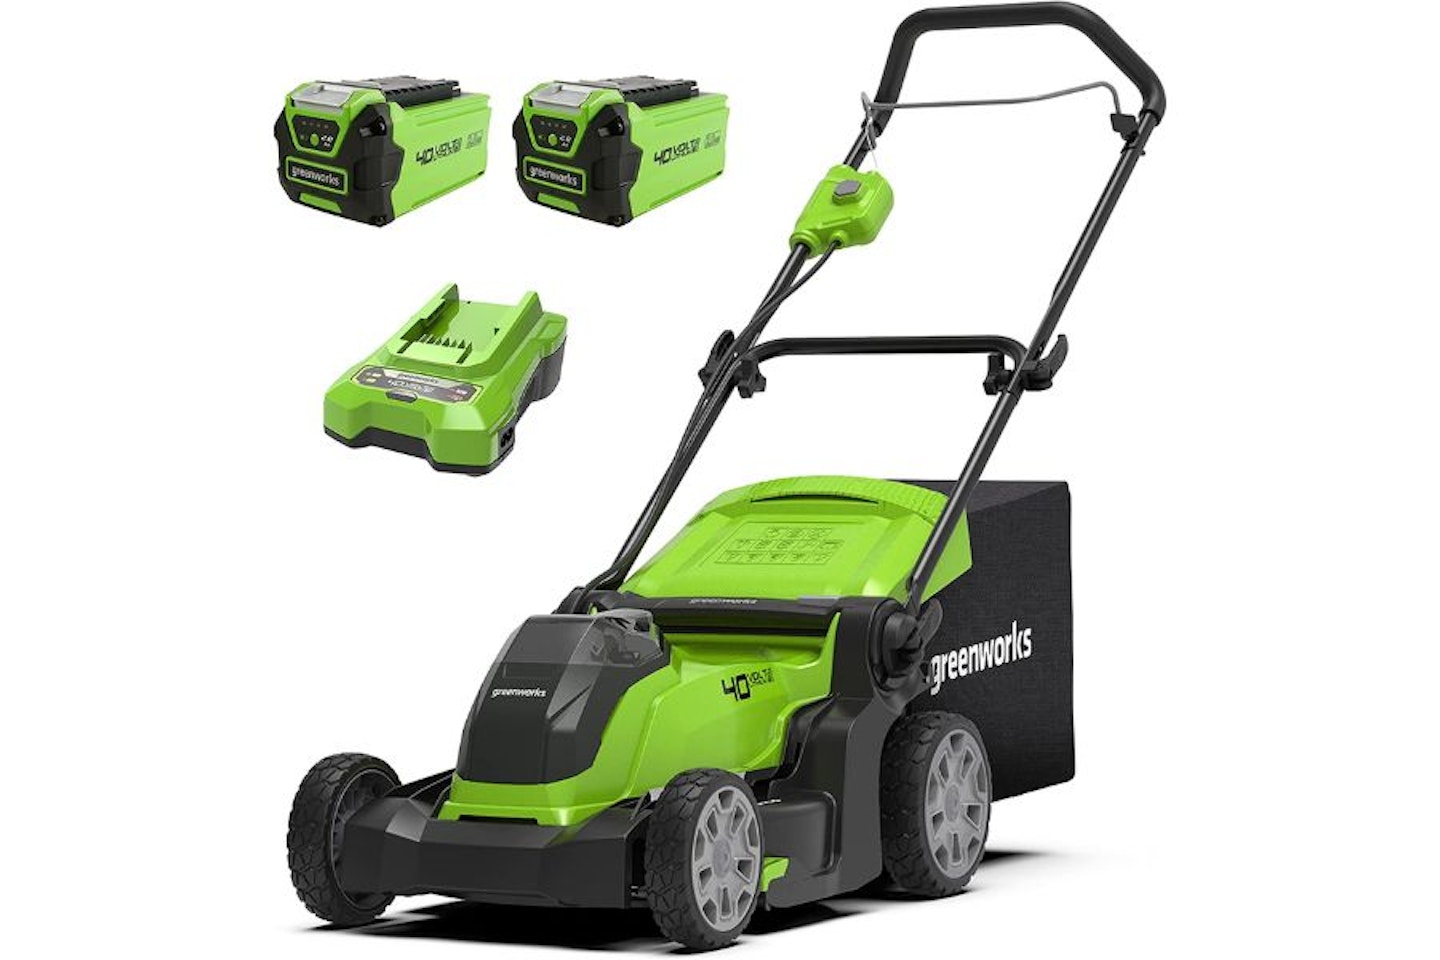  Greenworks G40LM41K2X Cordless Lawnmower